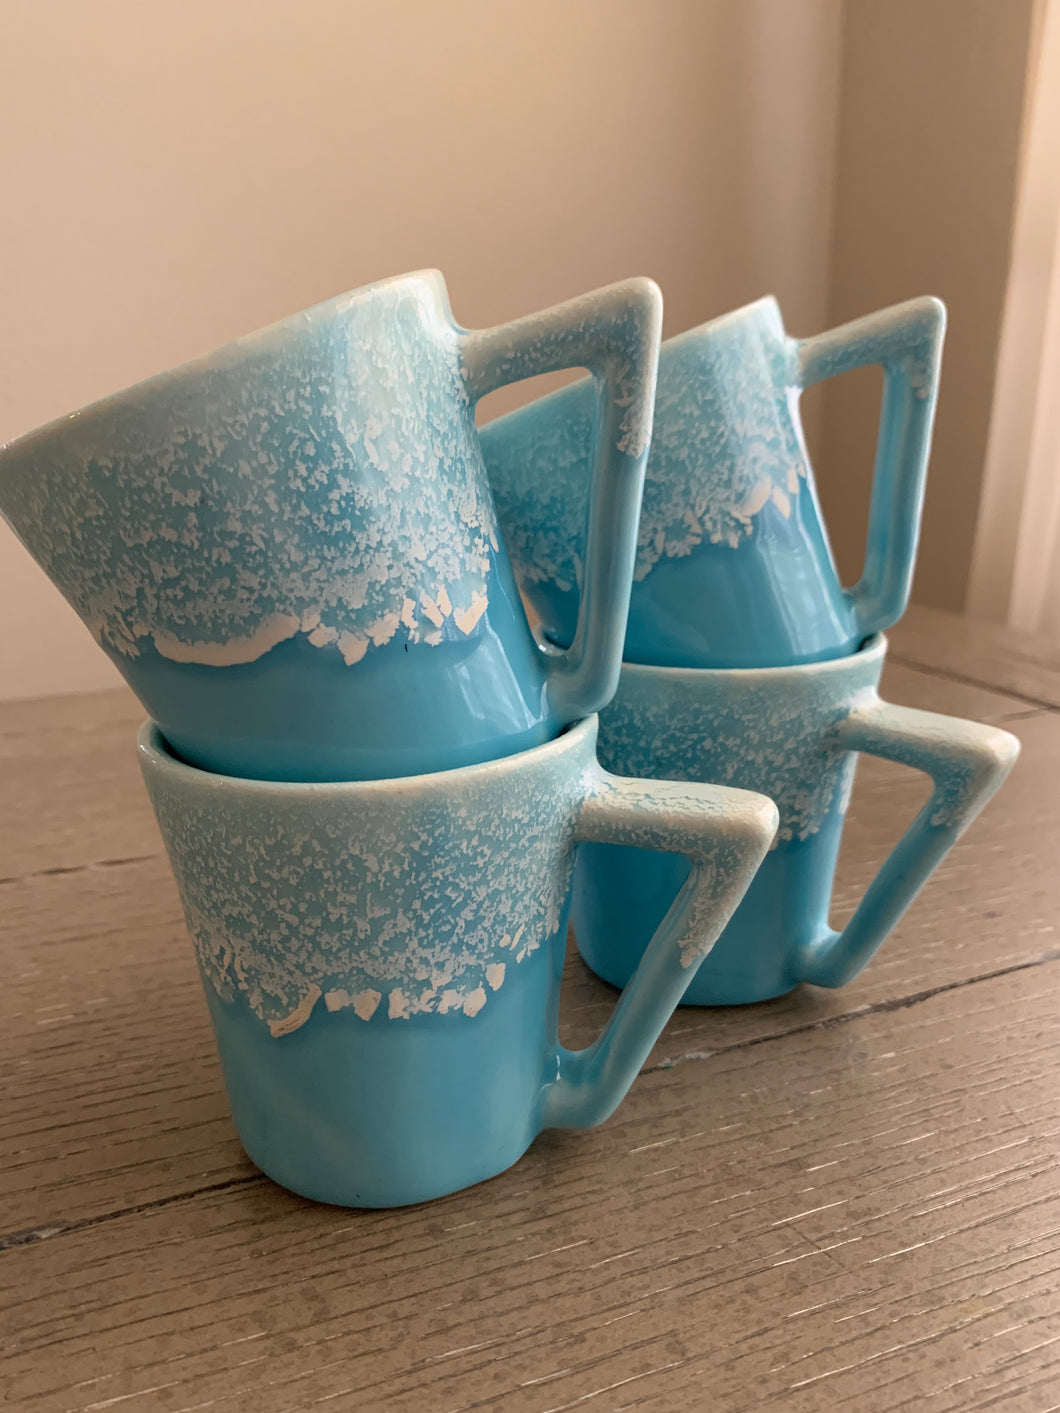 MCM Winart Pottery Mugs with Cream & Sugar Set